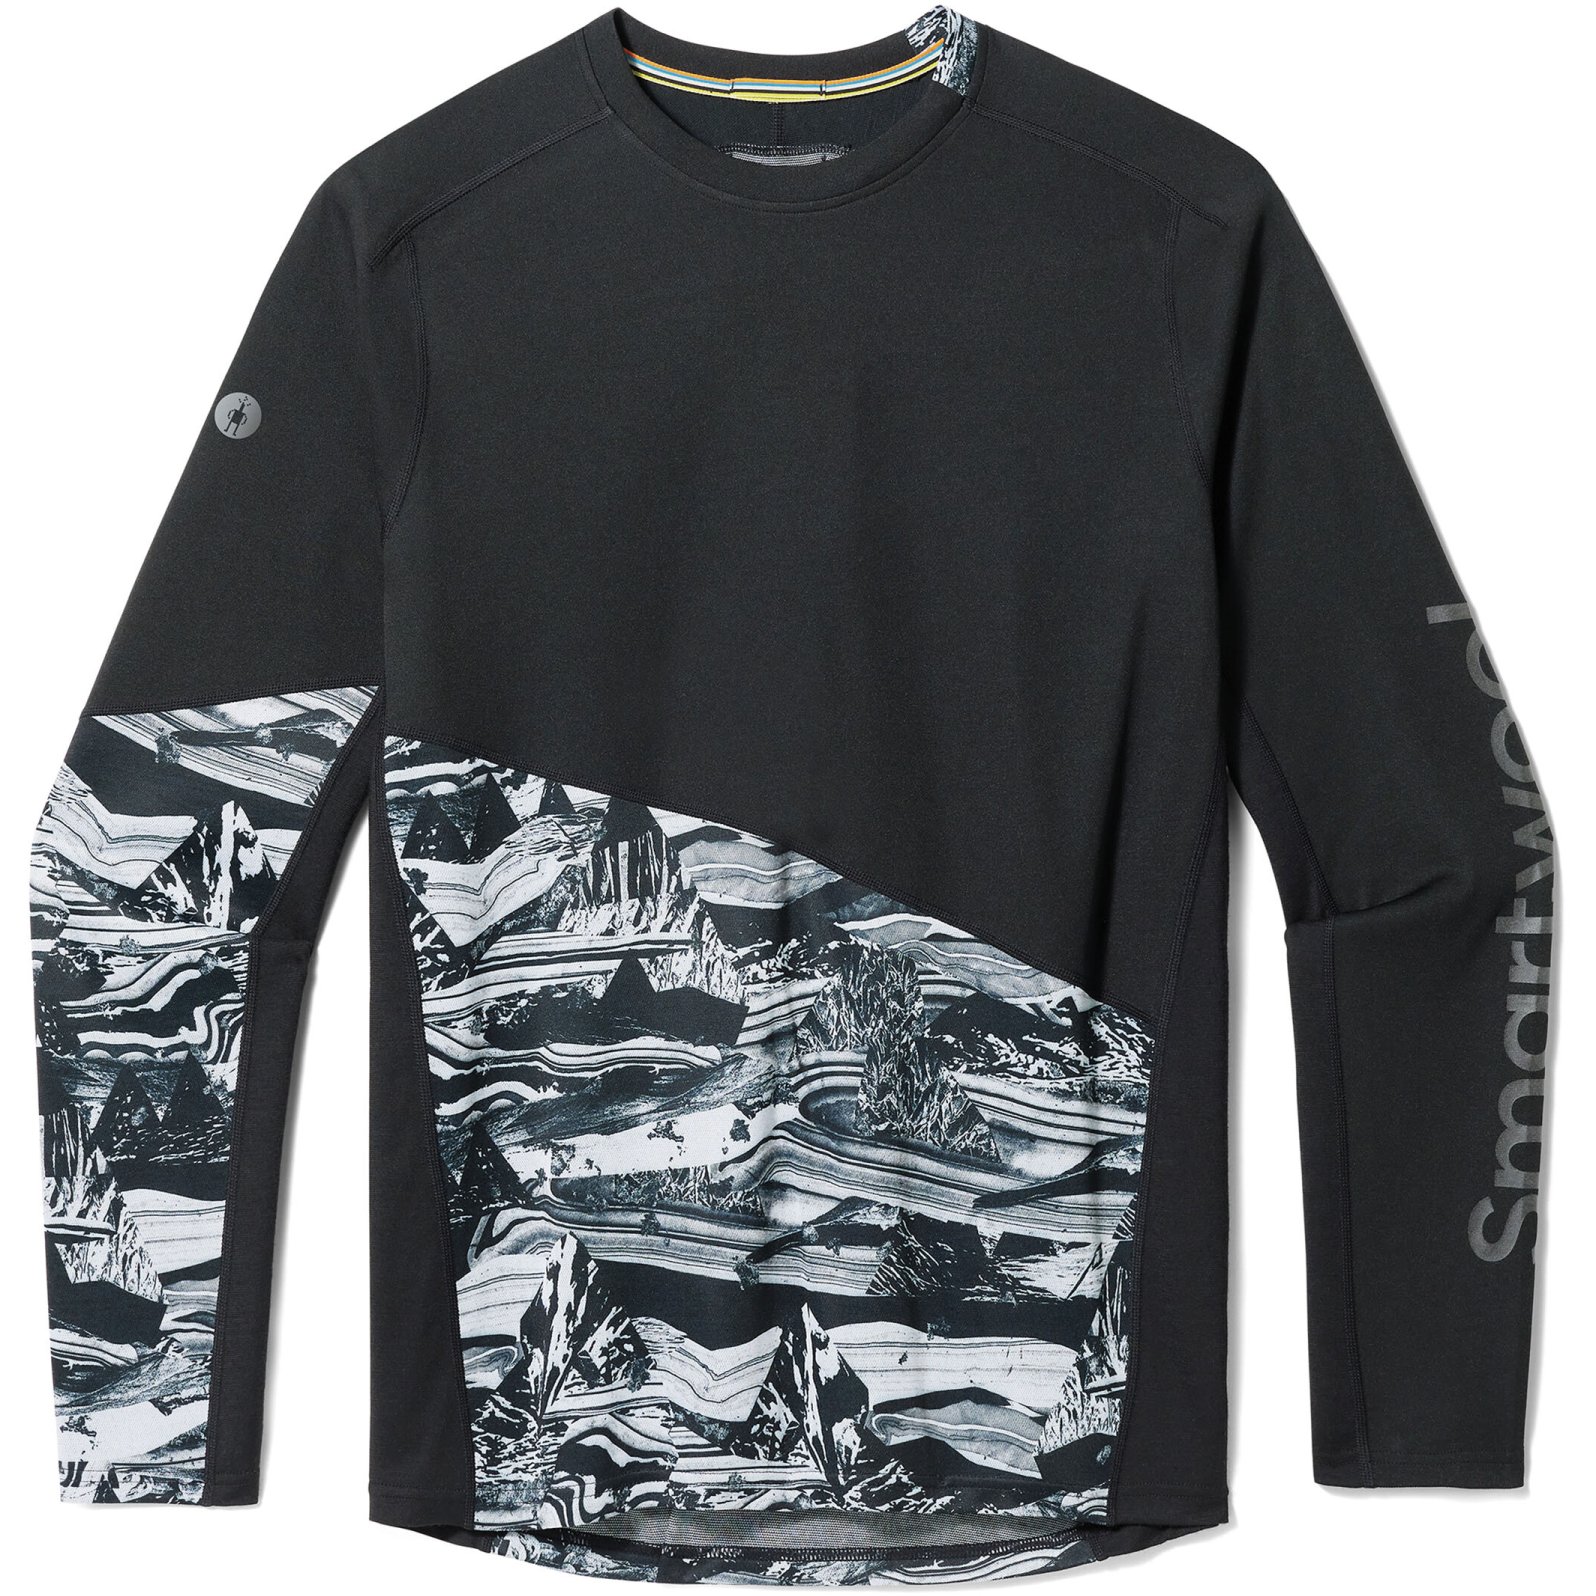 Productfoto van SmartWool Mountain Bike Shirt met Lange Mouwen - L60 black marble giants print